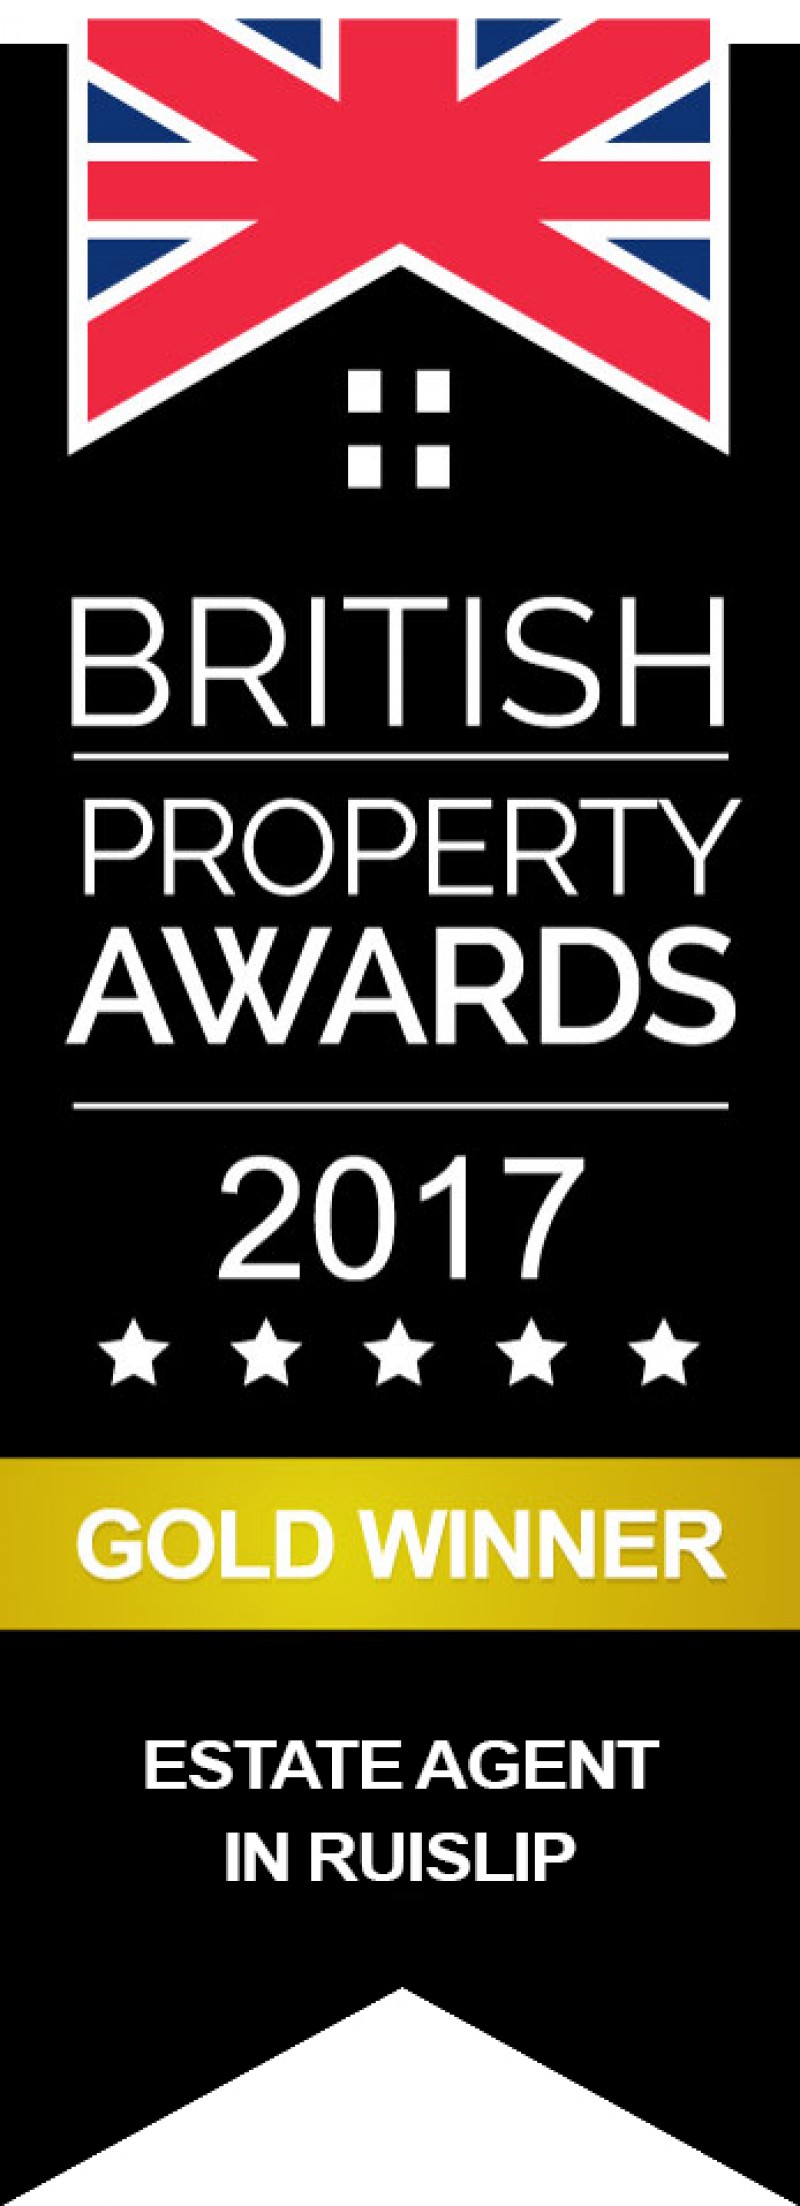 We have Won Best Independent Estate Agent in Ruislip!